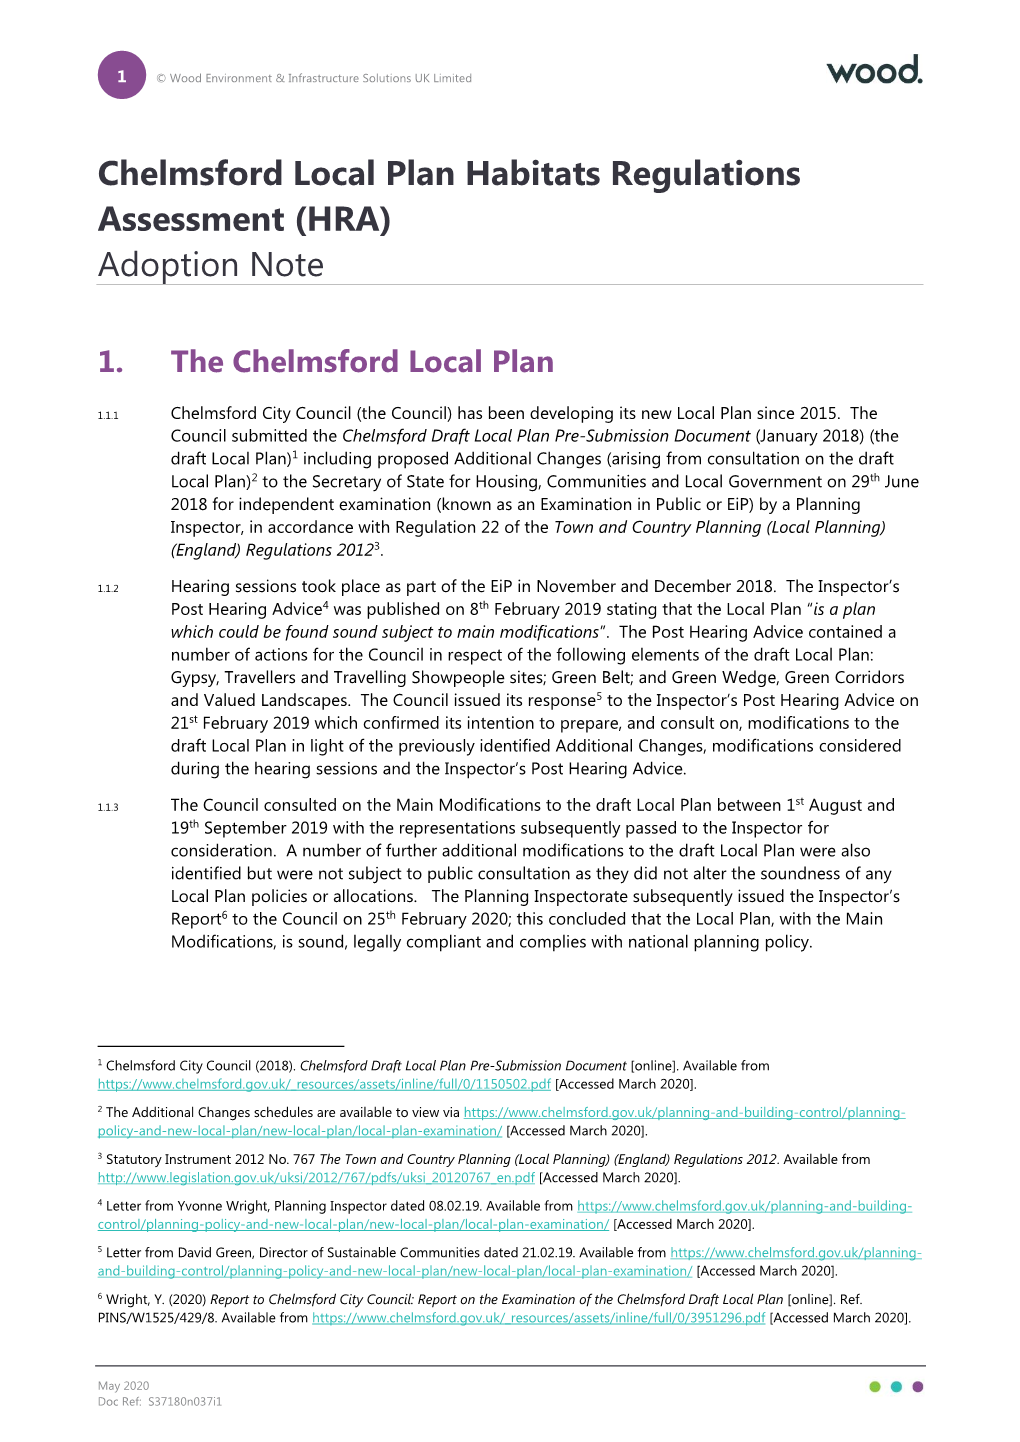 Chelmsford Local Plan Habitats Regulations Assessment (HRA) Adoption Note